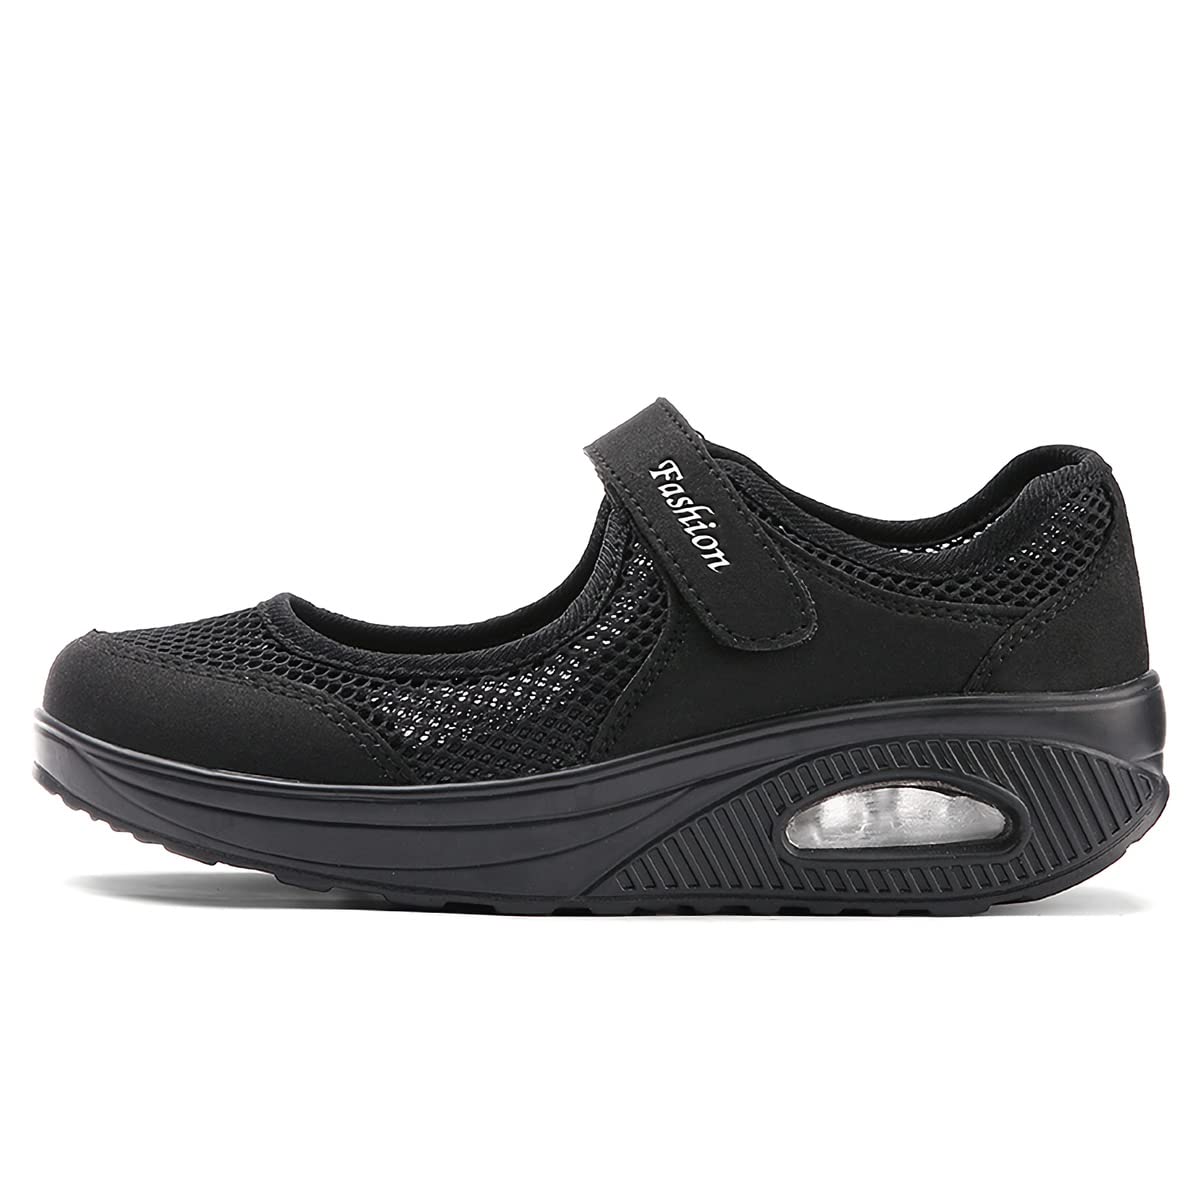 L LOUBIT Women's Platform Walking Shoes Breathable Mesh Sneakers Comfort Working Nursing Shoes Lightweight Wedge Loafers Black 40